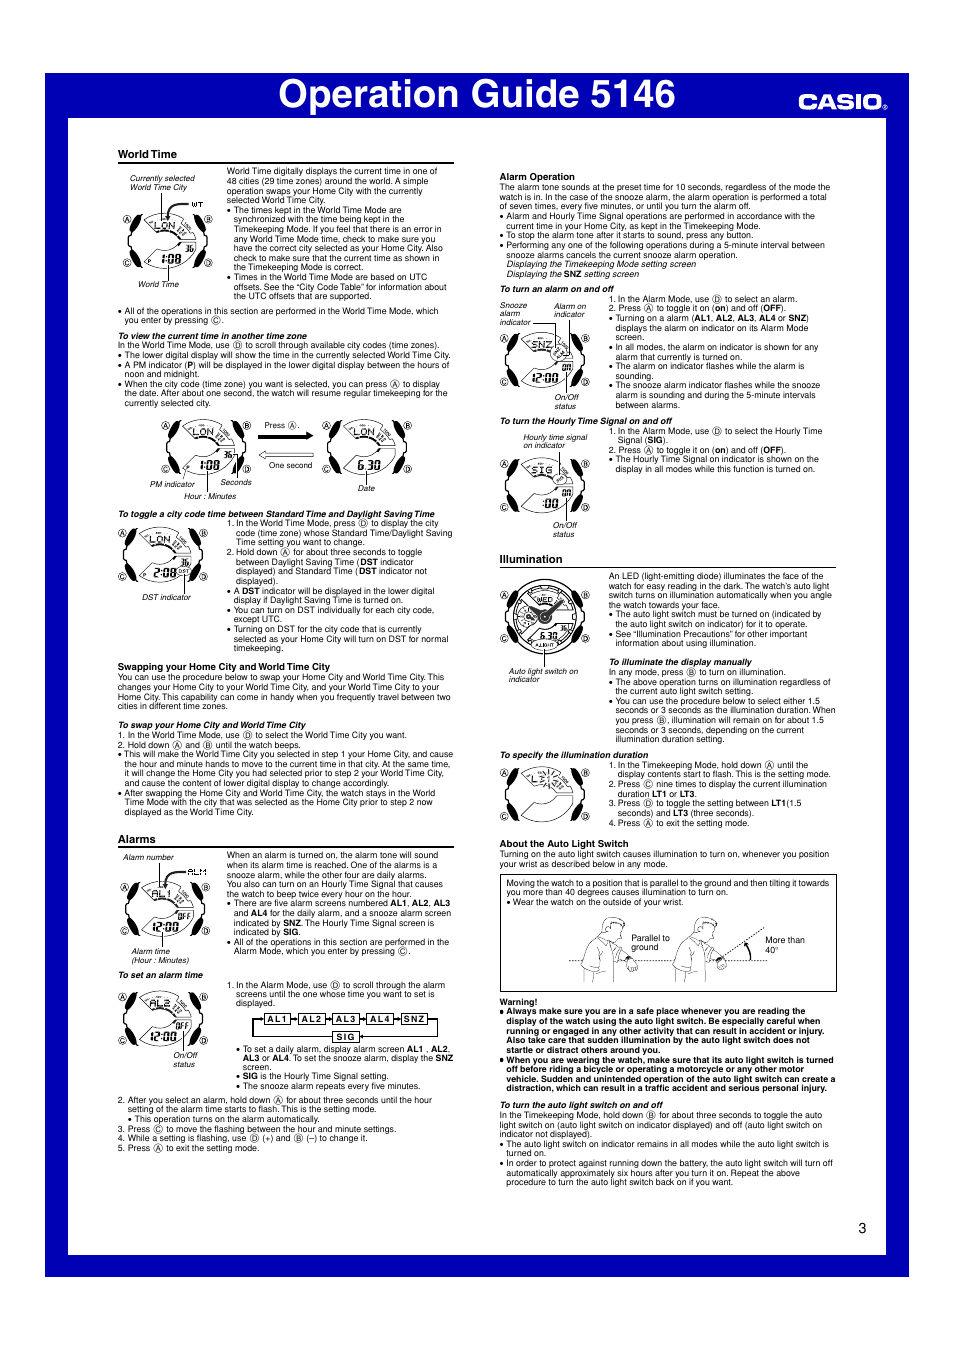 World time, Alarms, Illumination | Casio 5146 User Manual | Page 3 / 4 |  Original mode